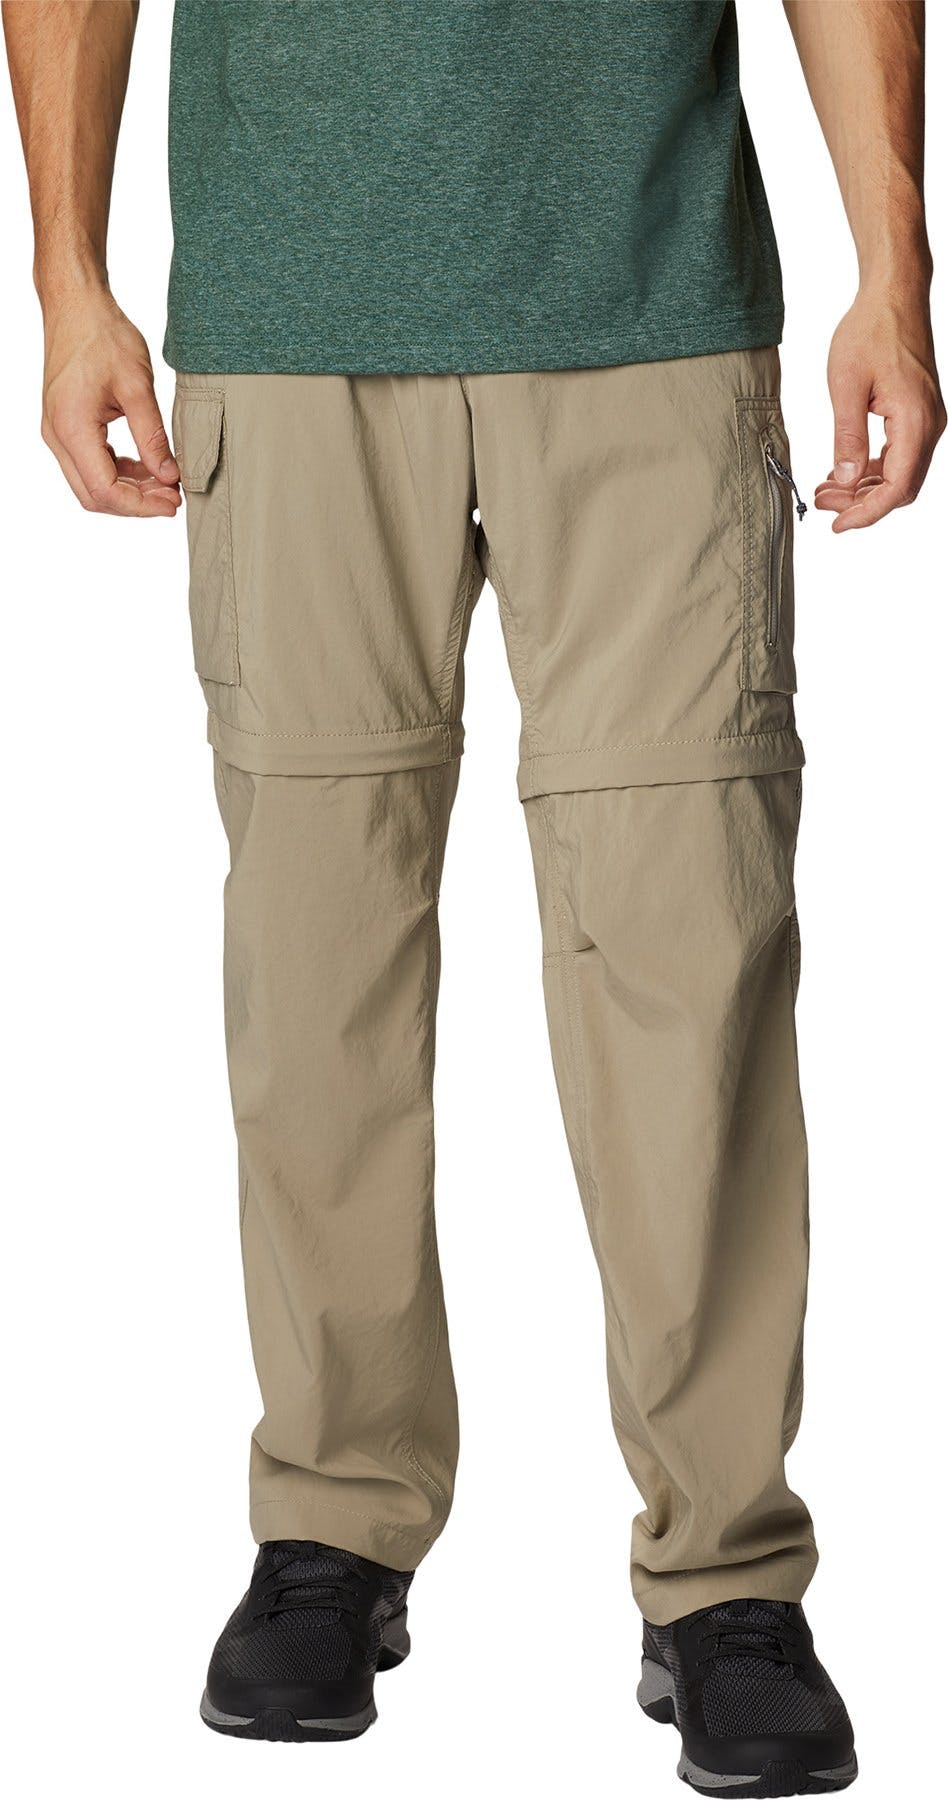 Product image for Silver Ridge Utility Convertible Pants - Men's